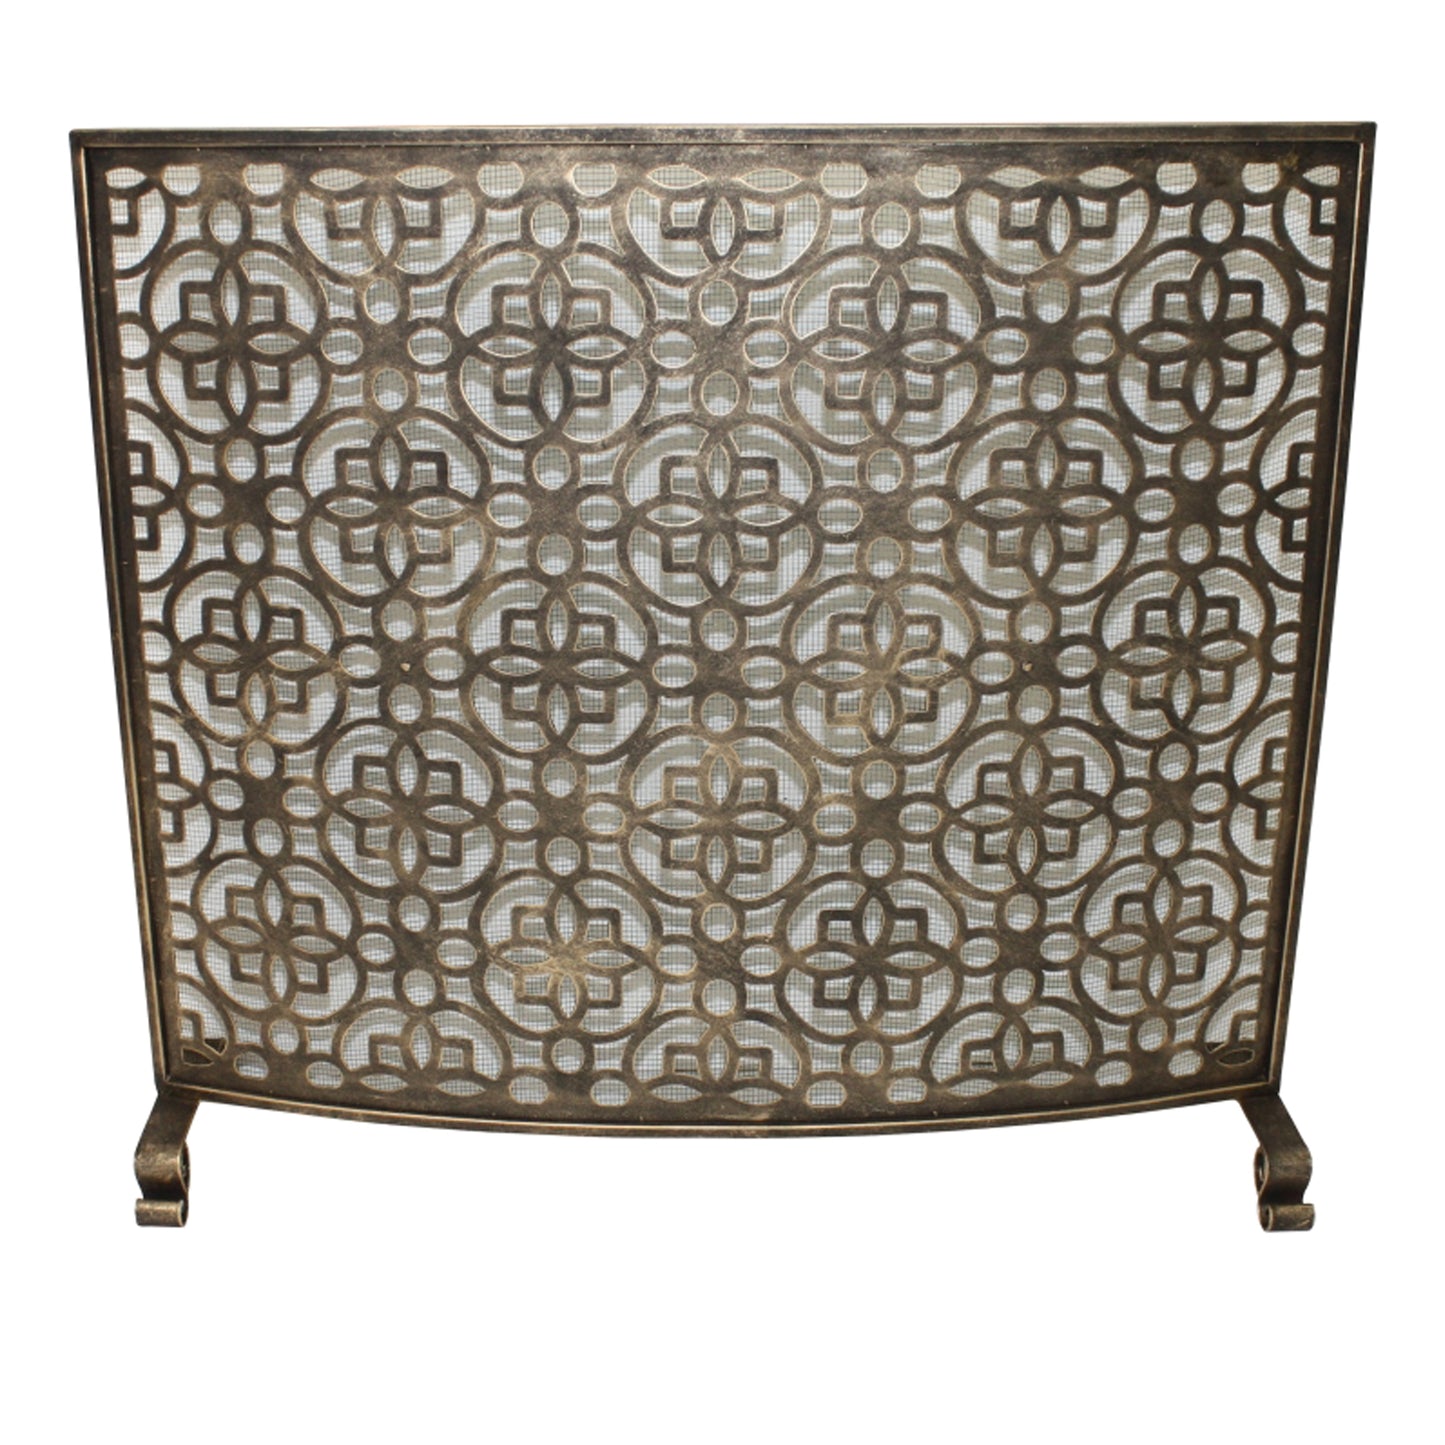 Fireplace Screen Light Burnished Gold Iron Geometric Floret Design Curved Design